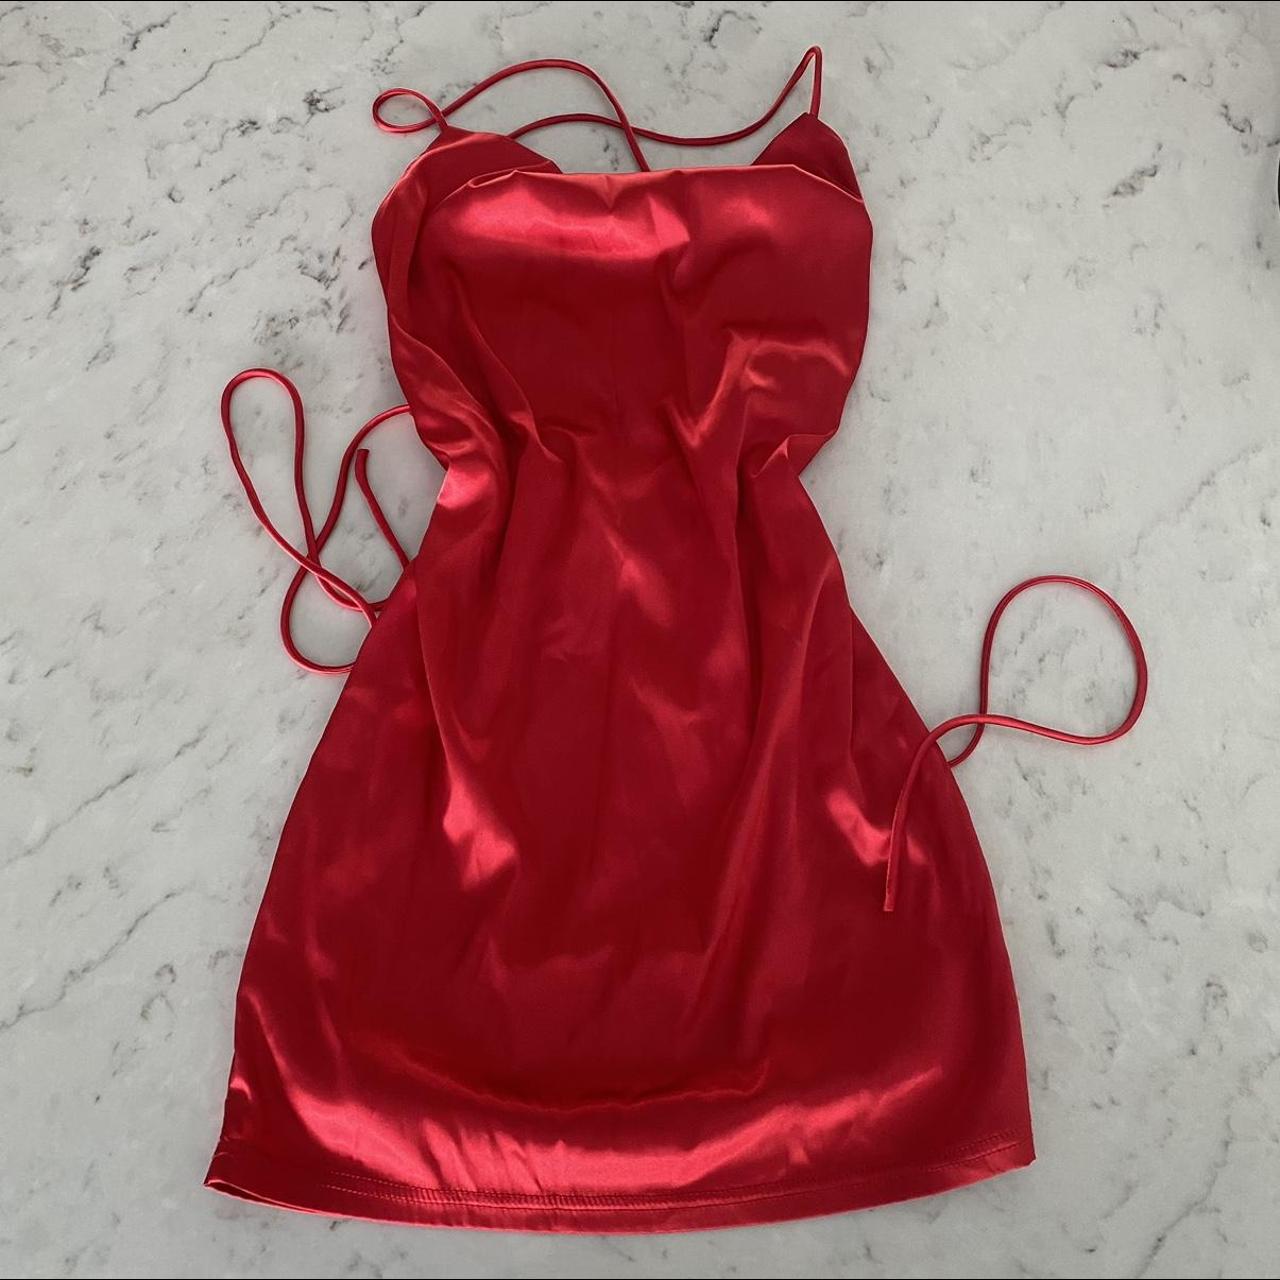 Fashion nova true red cowlick slip dress with... - Depop